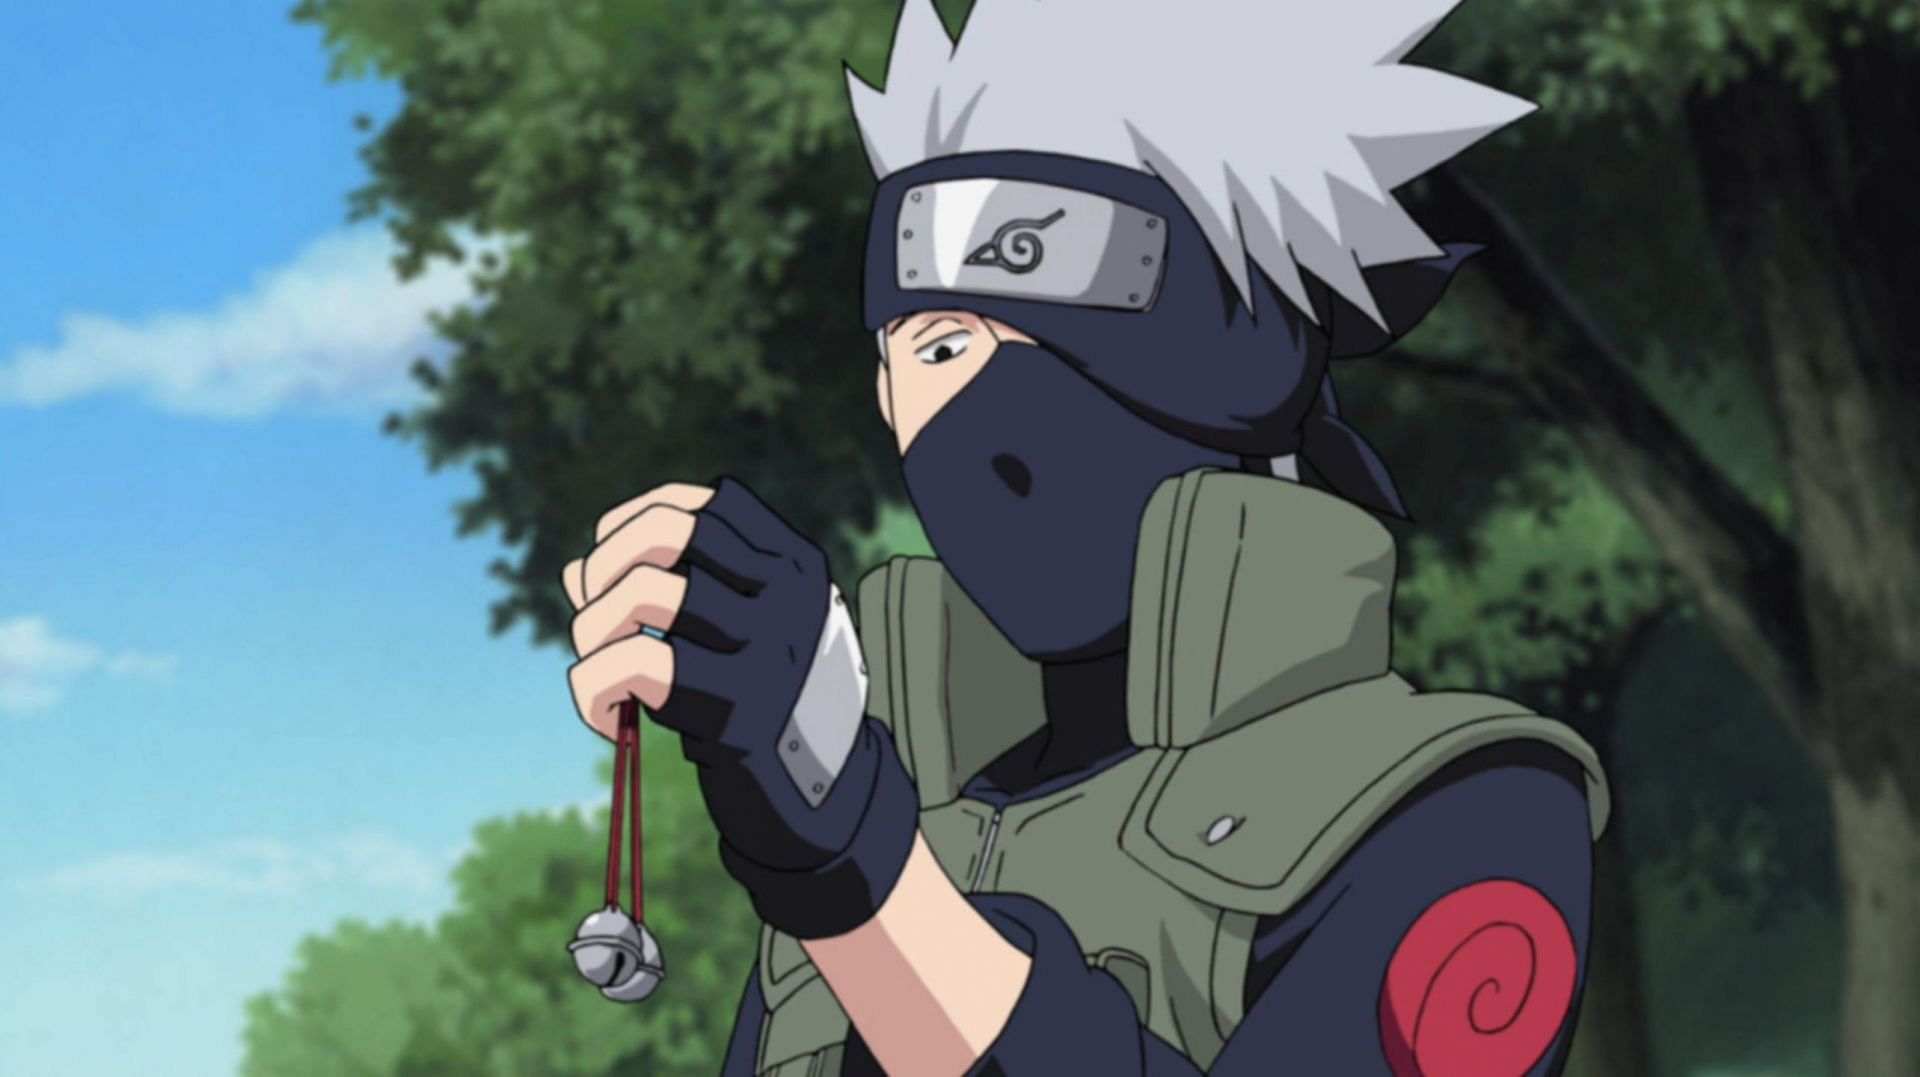 Kakashi as seen in the Naruto series (Image via Pierrot)